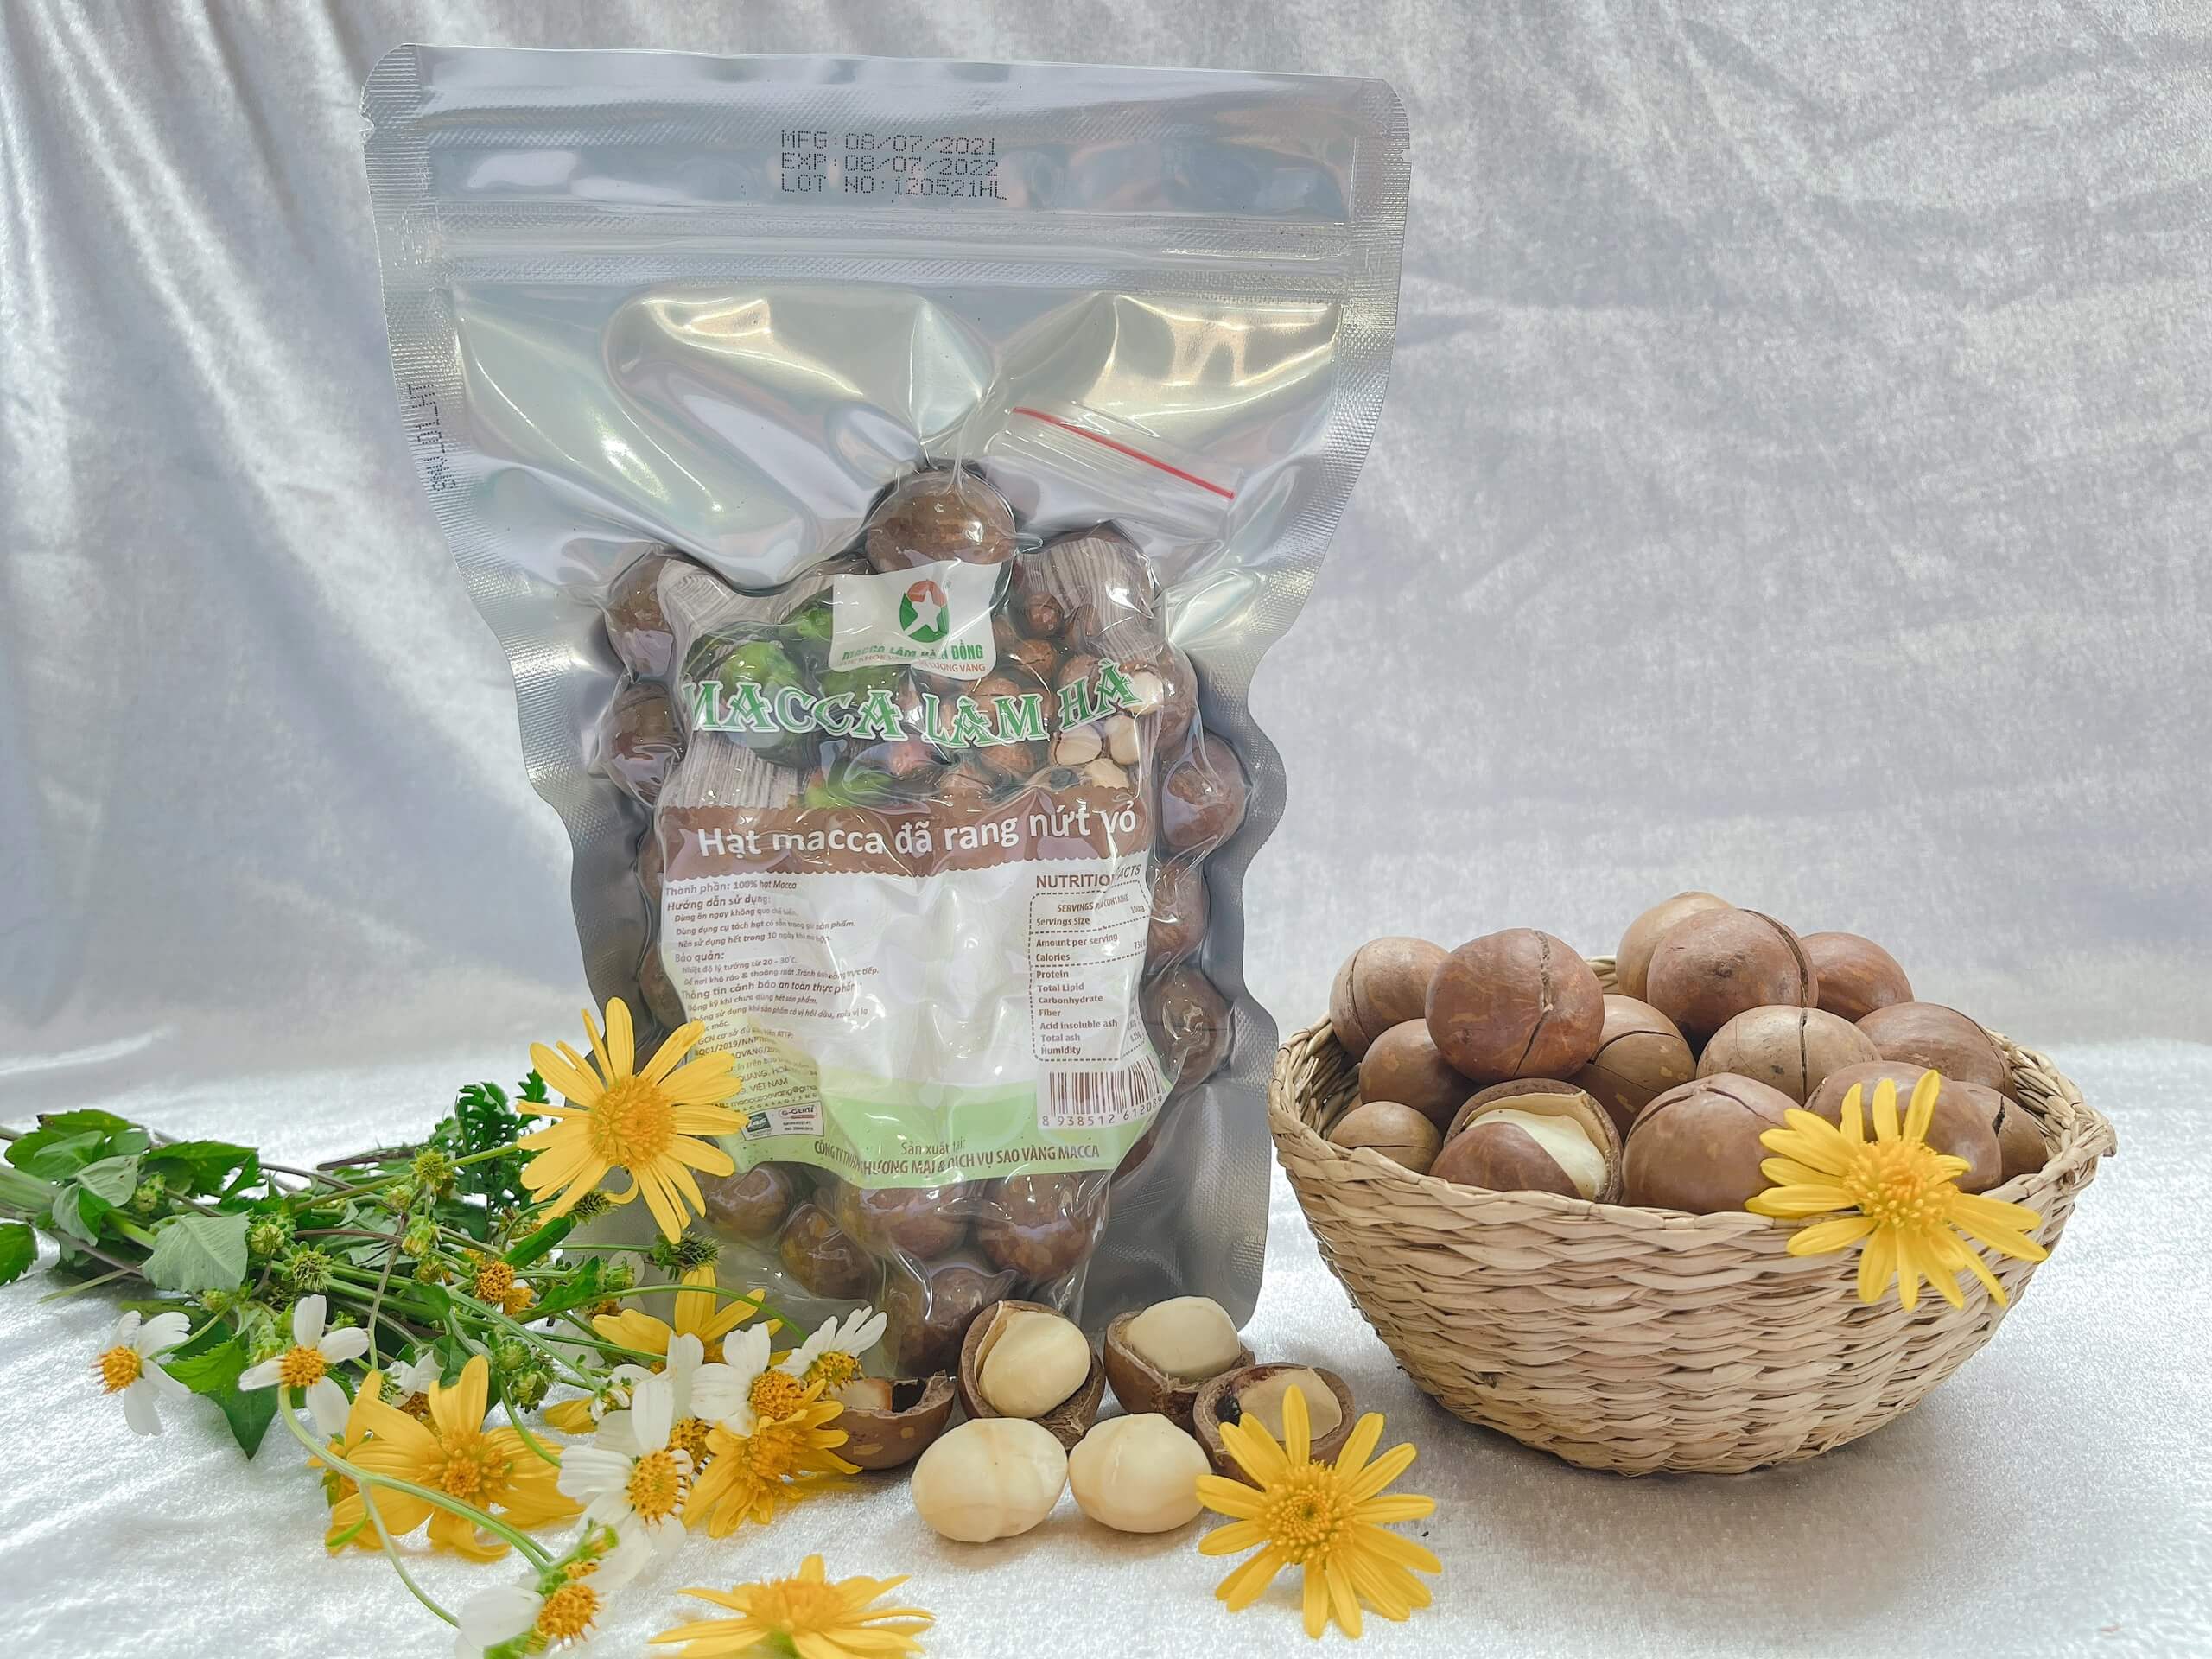 Choosing macadamia nuts by product packaging